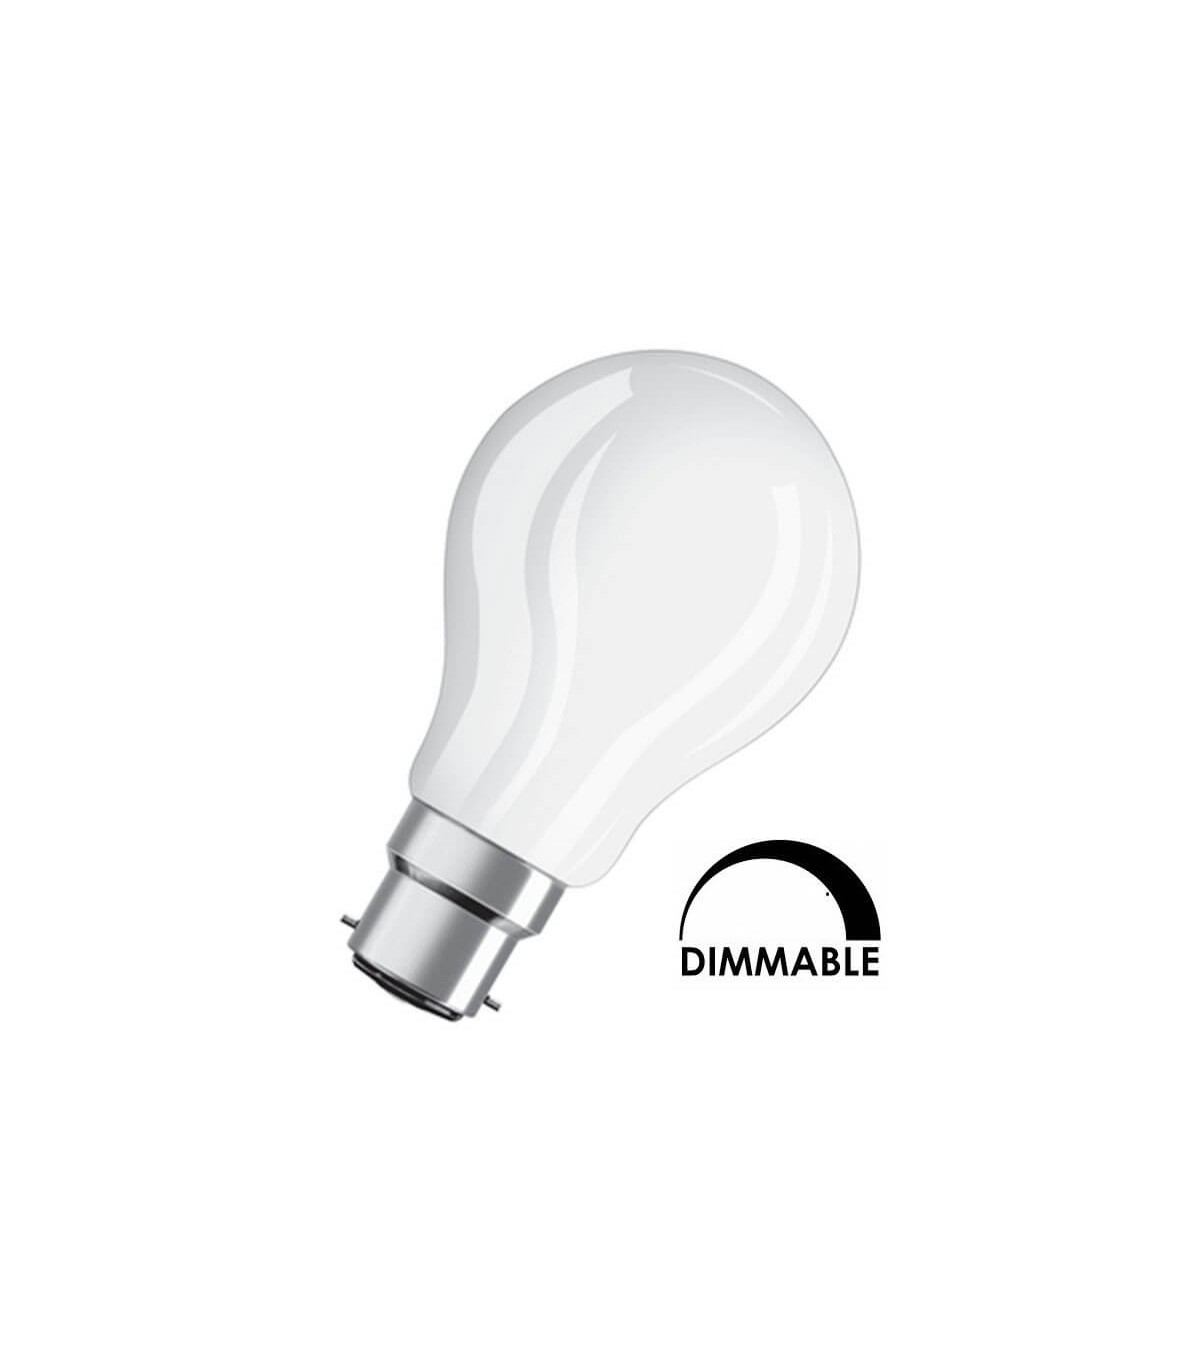 Ampoule LED Osram Standard A75 7.5W substitut 75W 1055lumens blanc